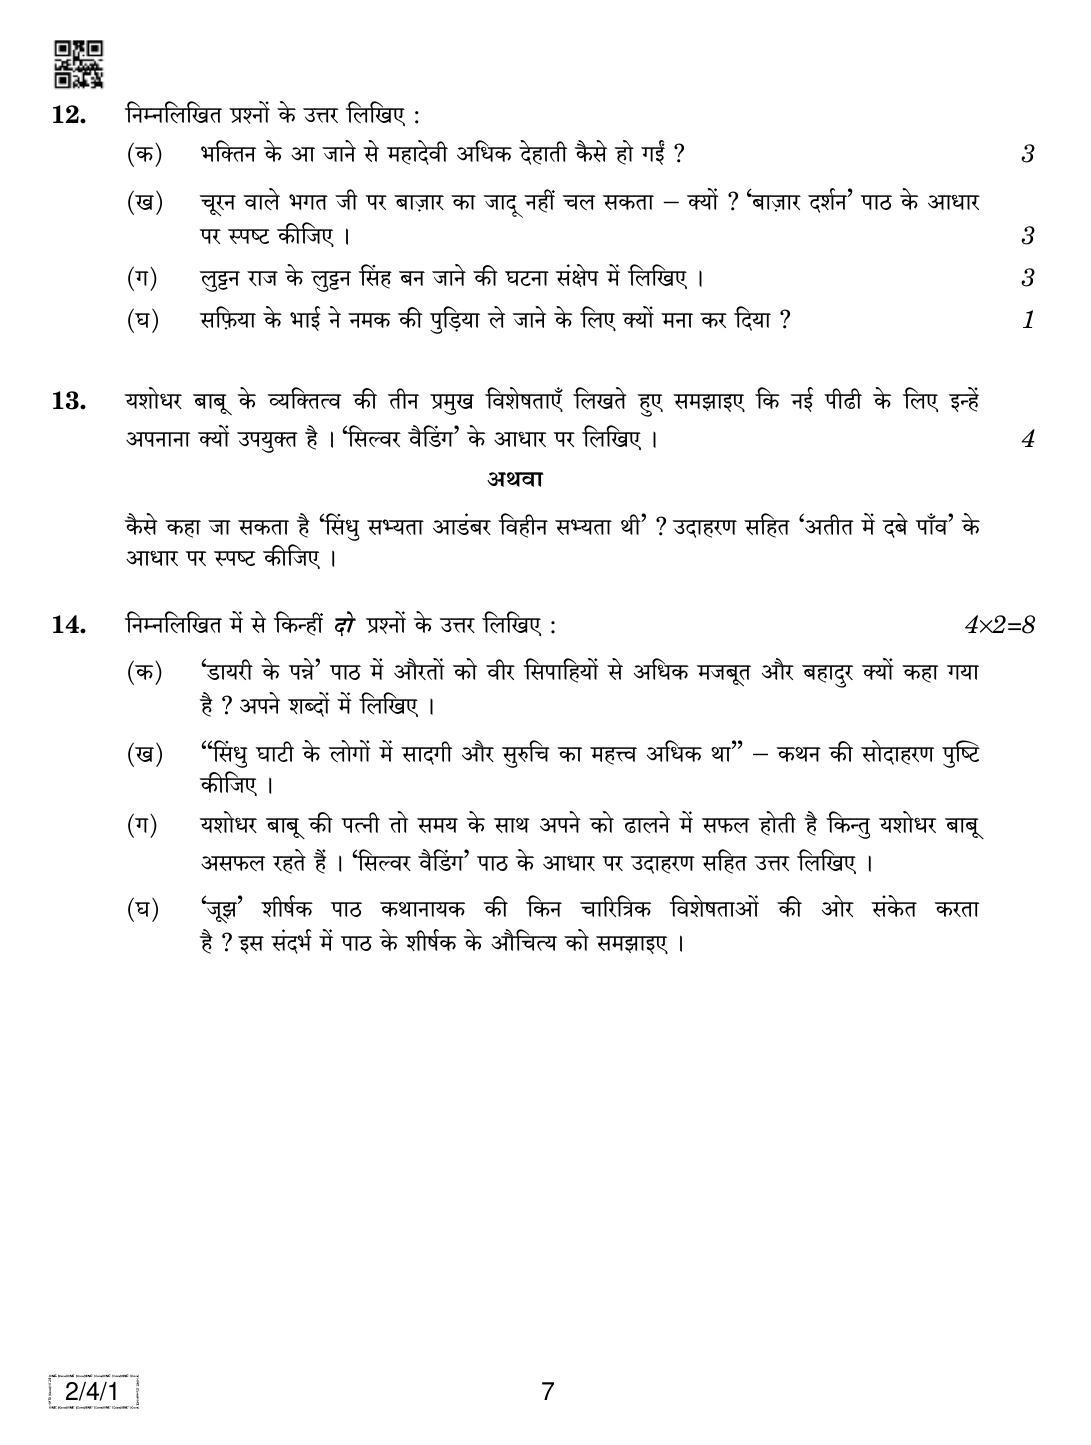 CBSE Class 12 2-4-1 Hindi Core 2019 Question Paper - Page 7